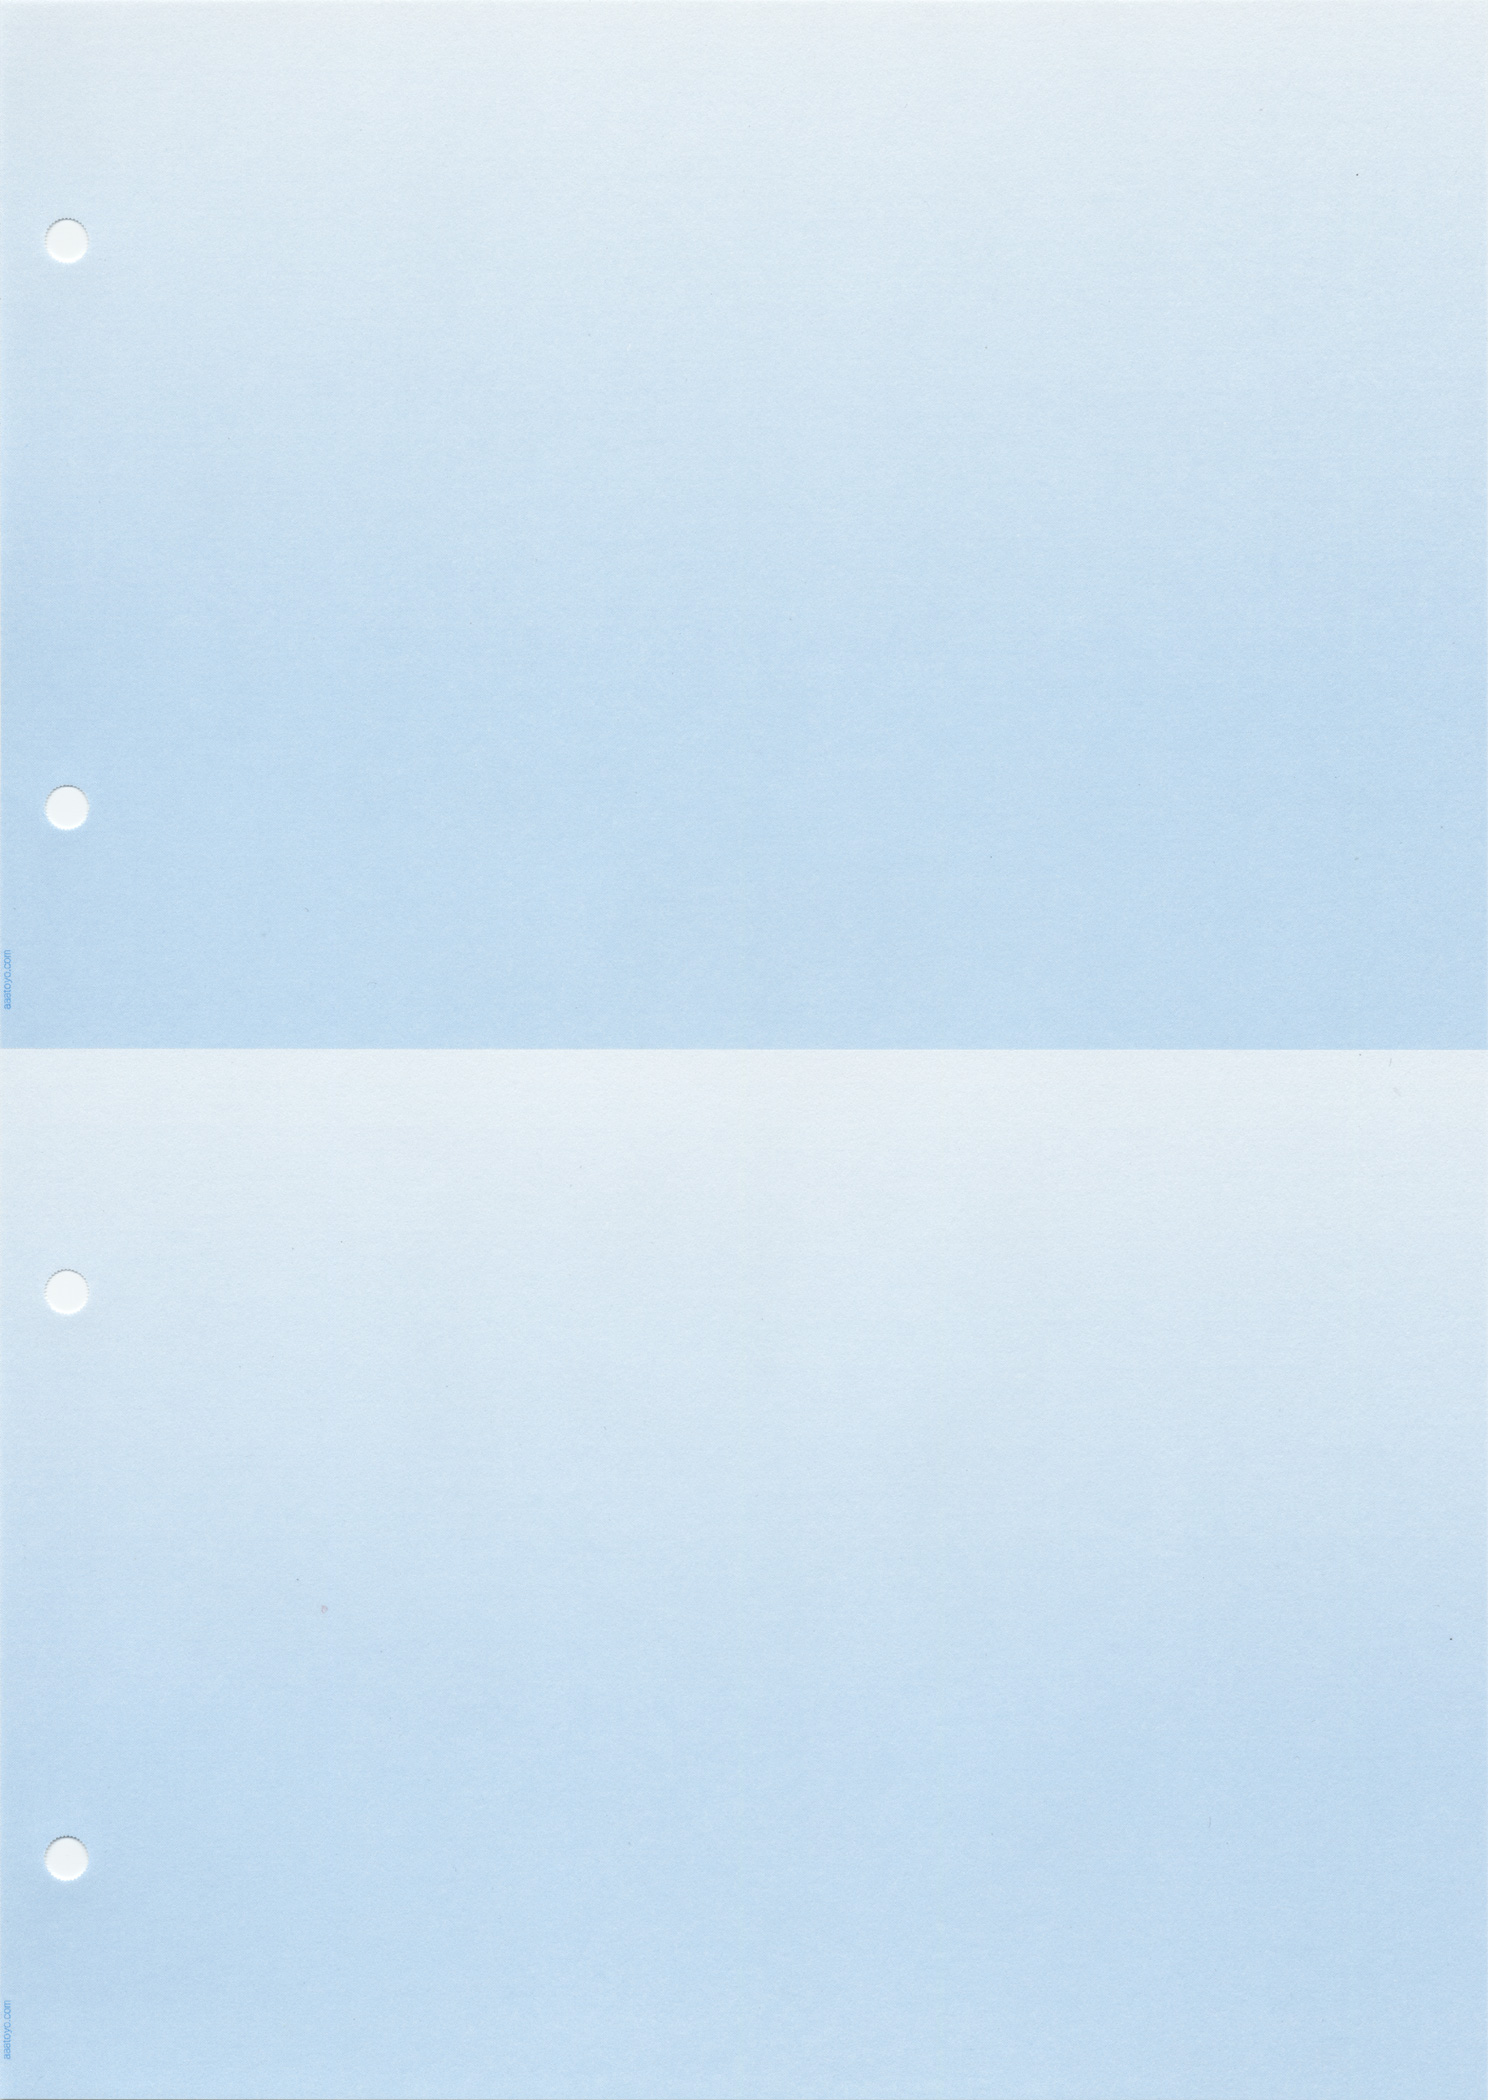 A4 ブルーグラデーション55kg 2分割/マイクロミシン目・ファイル穴(青1色)  2,000枚画像